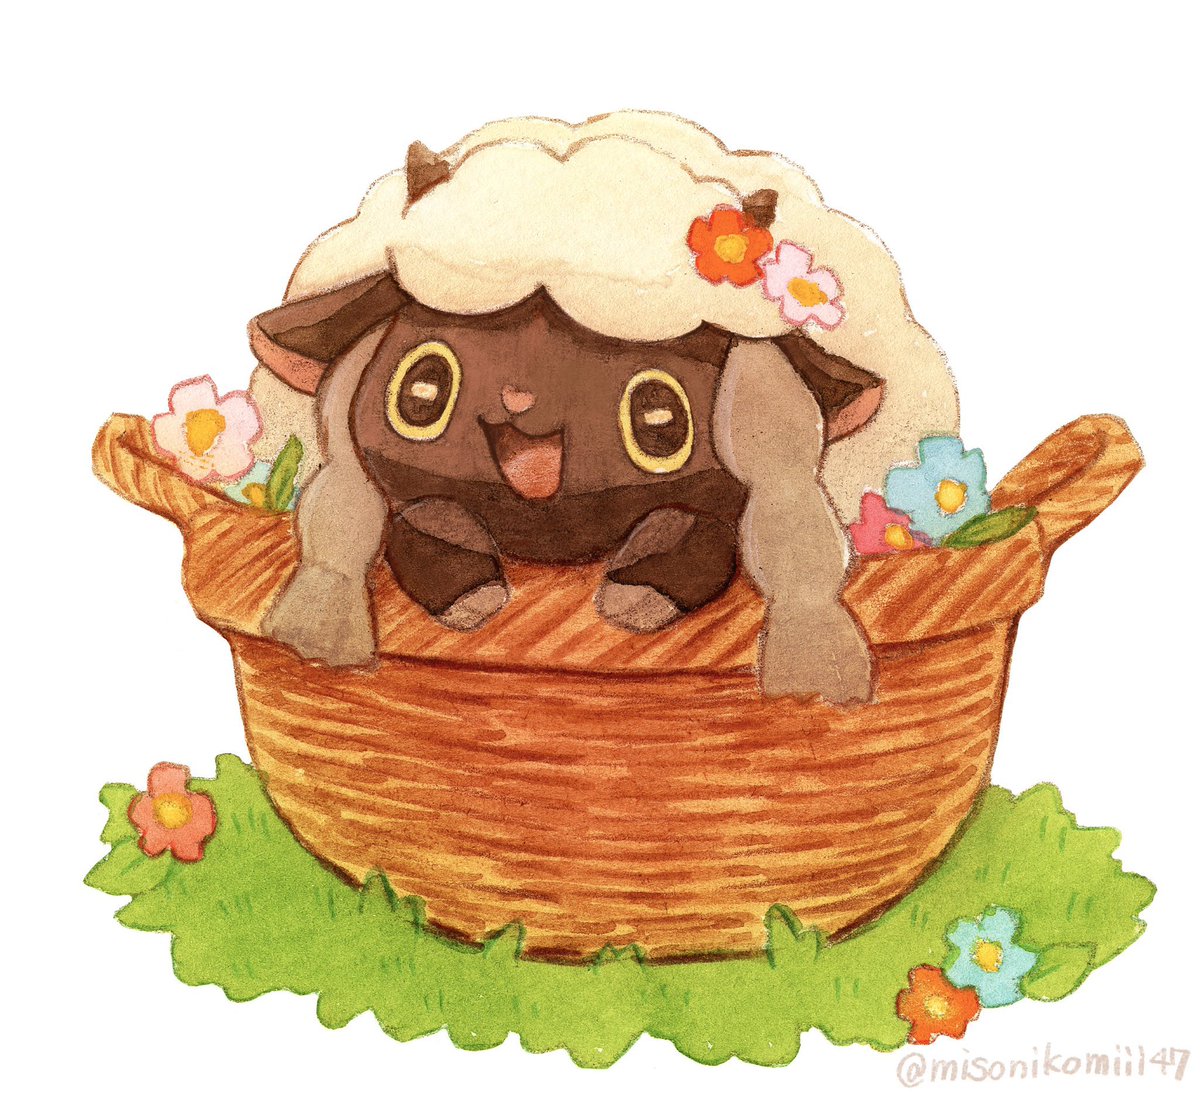 no humans pokemon (creature) basket open mouth solo flower smile  illustration images